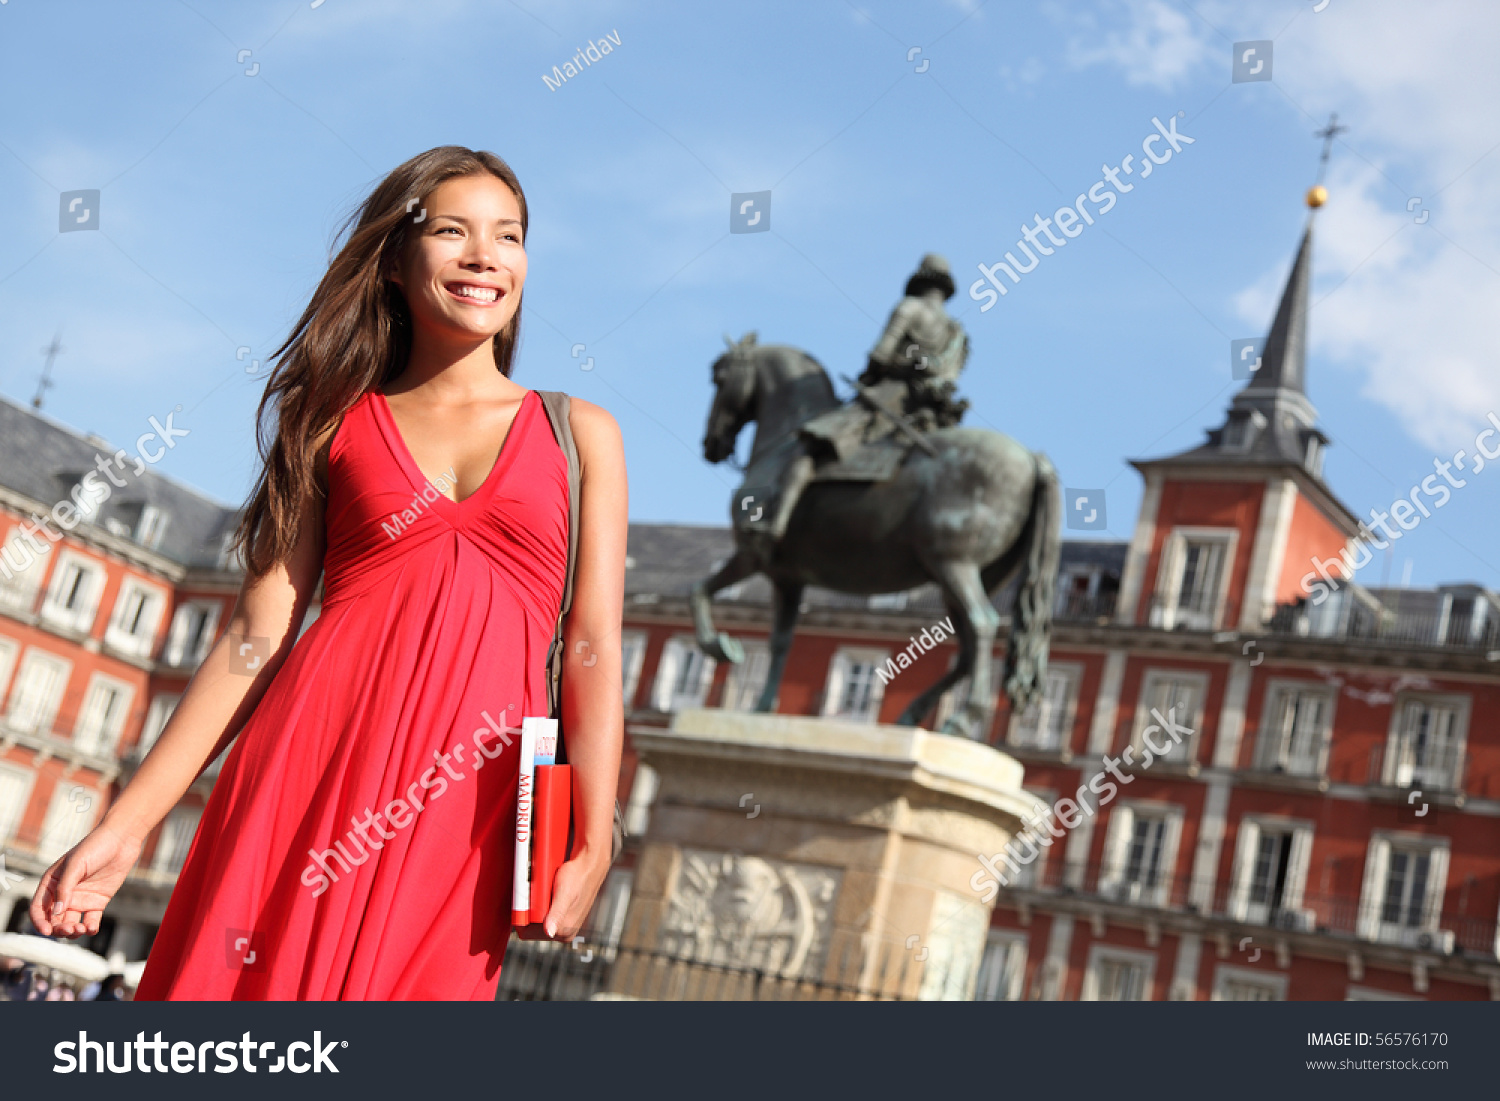 Madrid Woman Tourist Walking On Plaza Stock Photo 56576170 - Shutterstock1500 x 1101